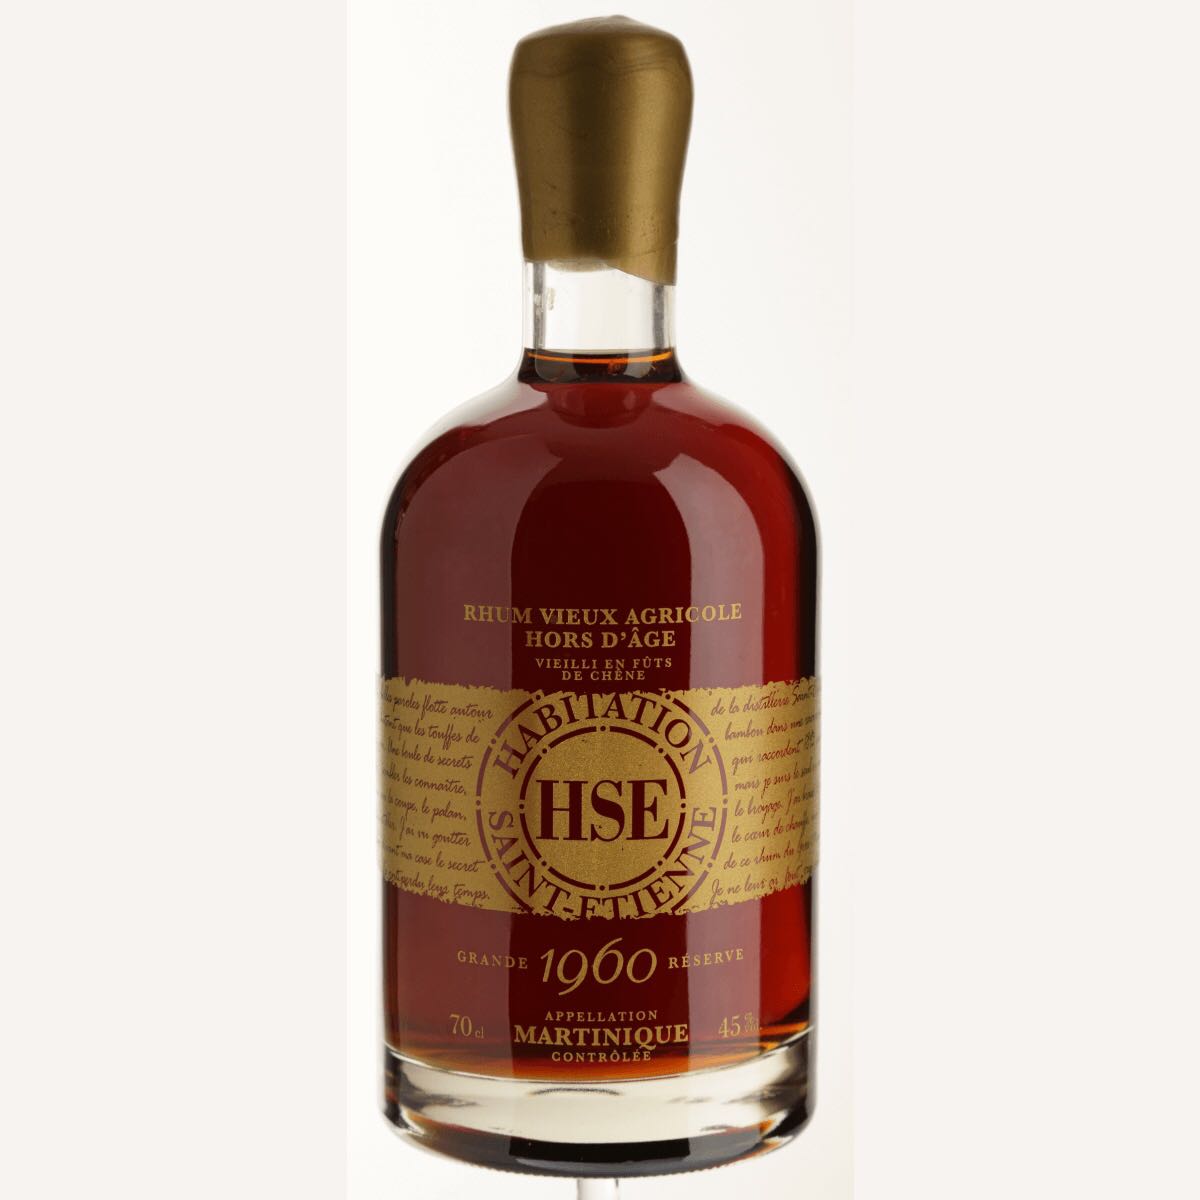 Bottle image of HSE Hors d‘Age